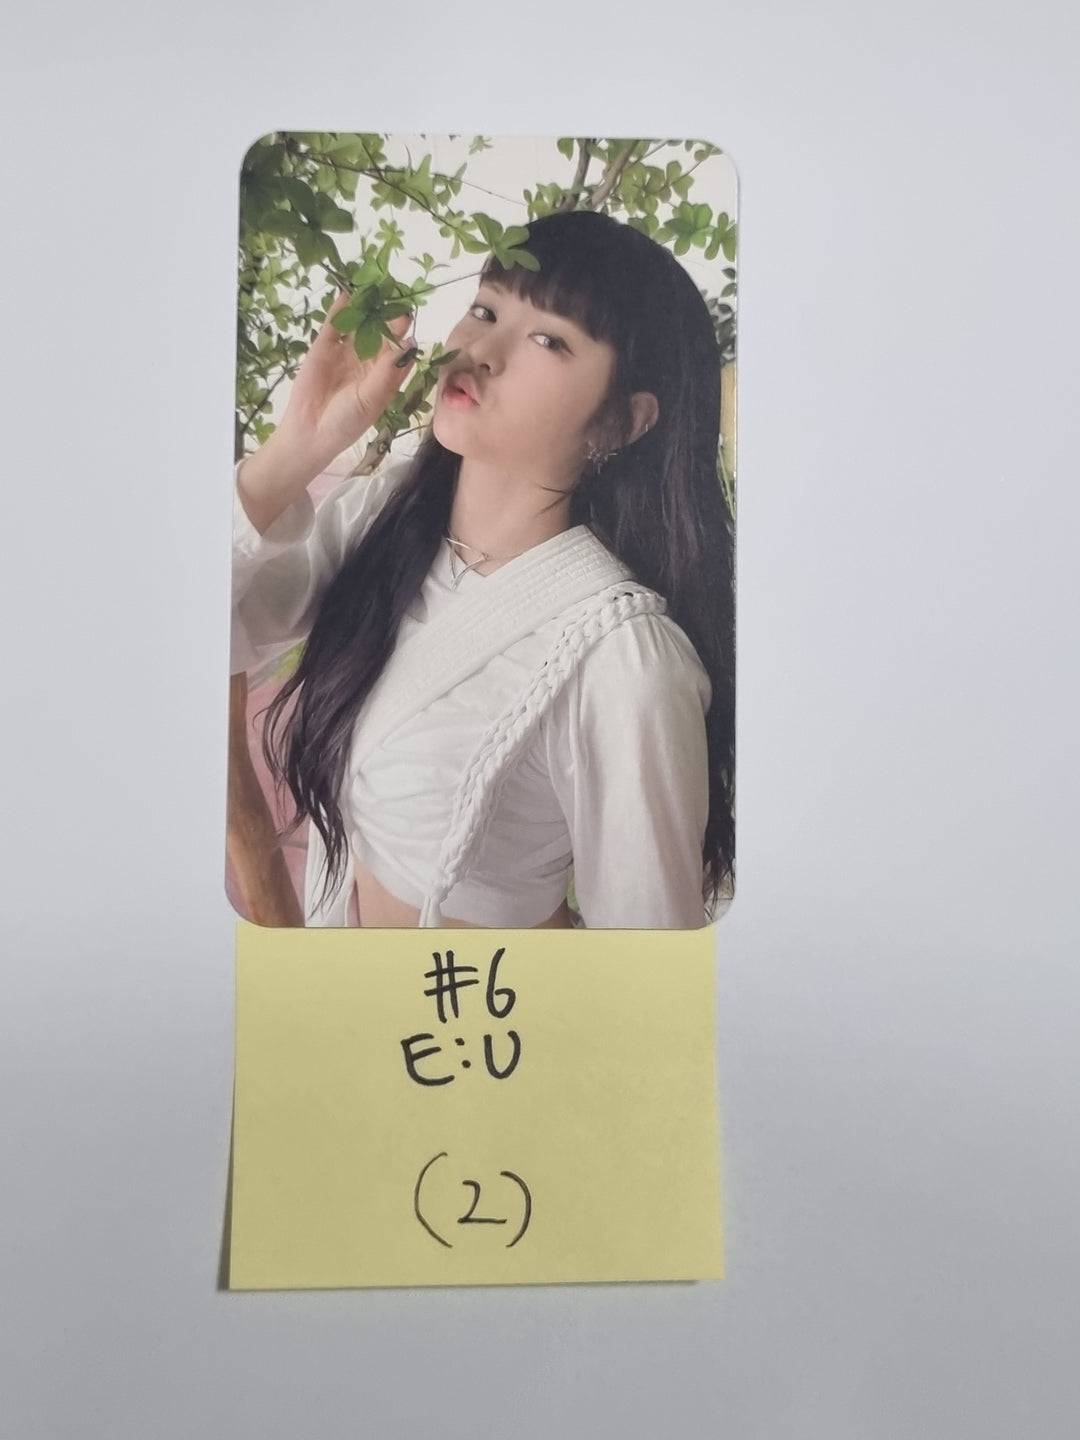 Everglow 'Last Melody' - Official Photocard ( E:U, SIHYEON, MIA )